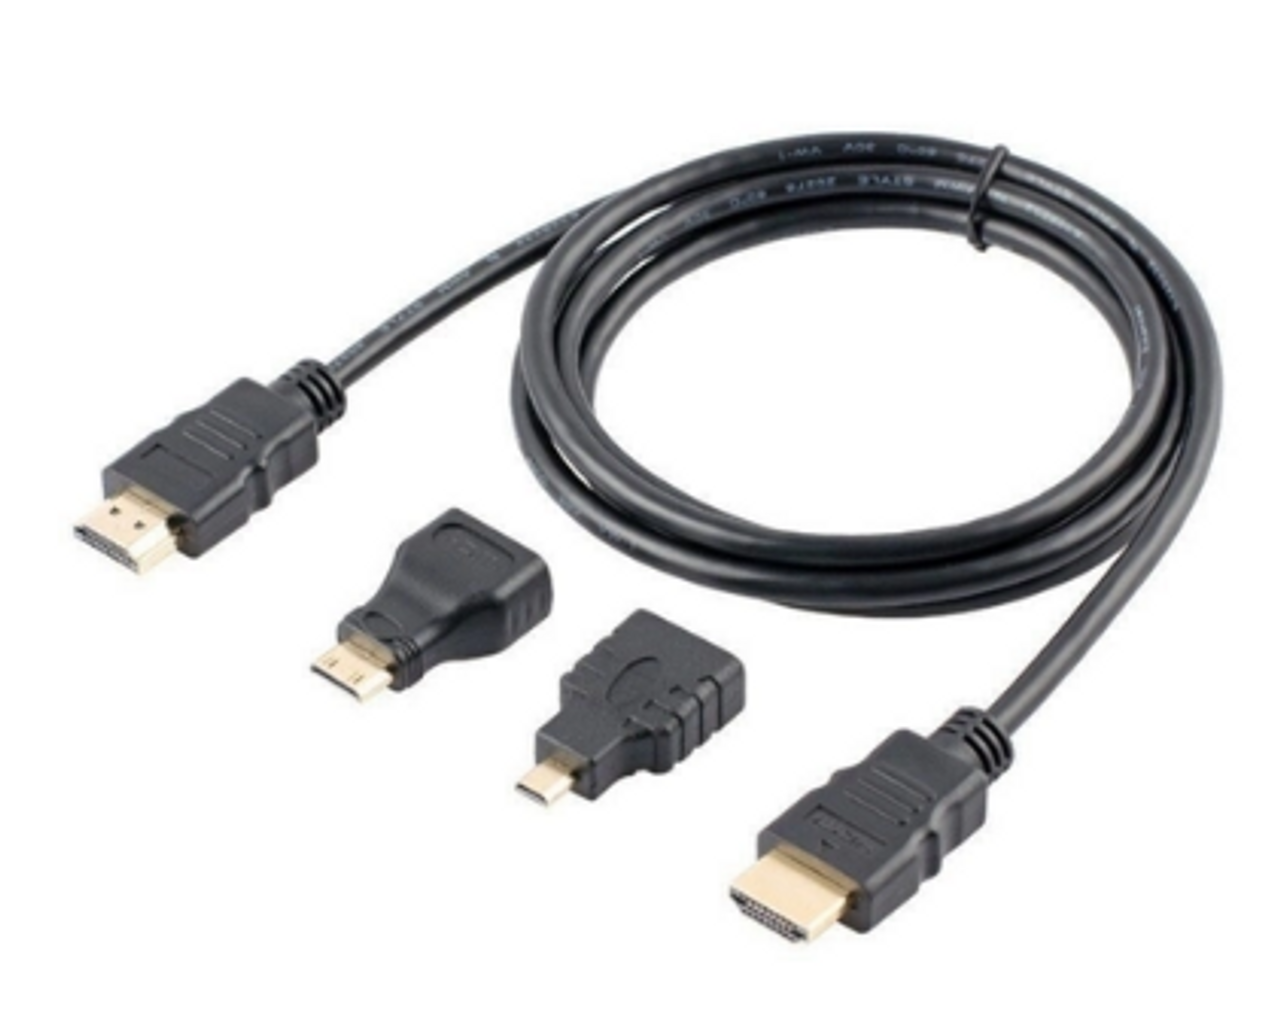 3 in 1 HDMI v1.4 Female to Mini And Micro HDMI Male Adapter